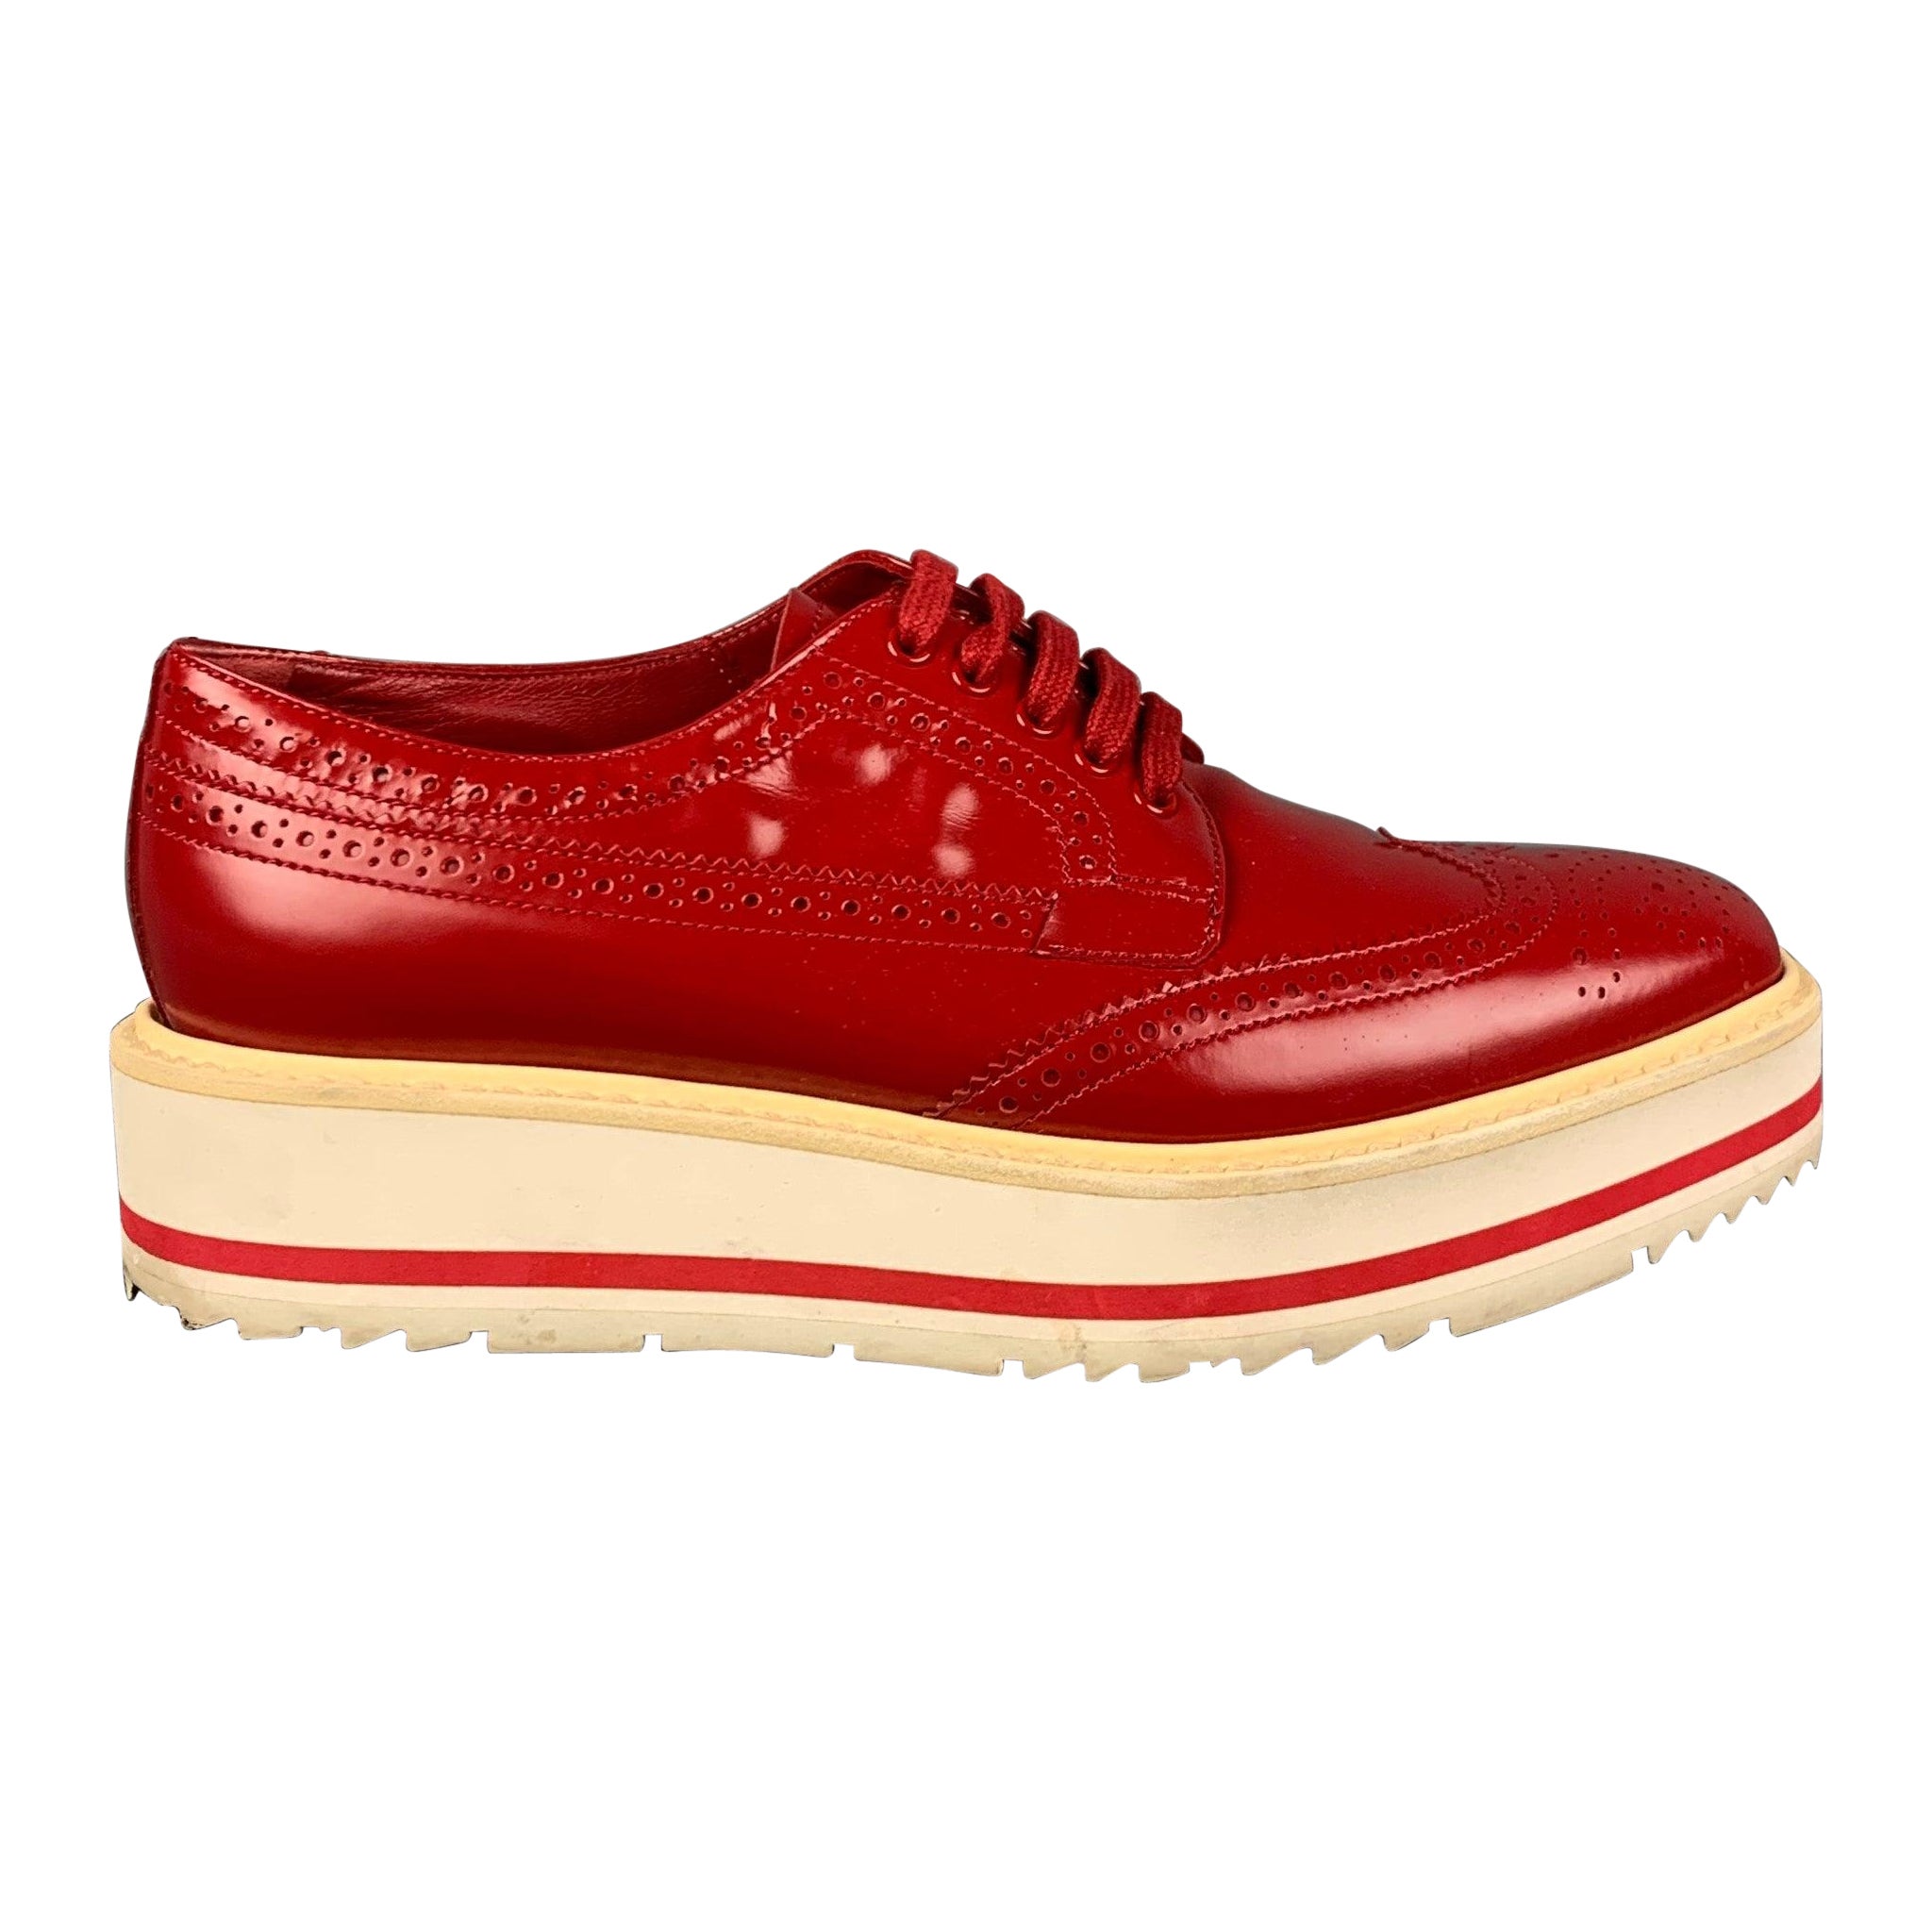 PRADA Taille 6 Chaussures Wingtip en cuir perforé rouge et blanc en vente